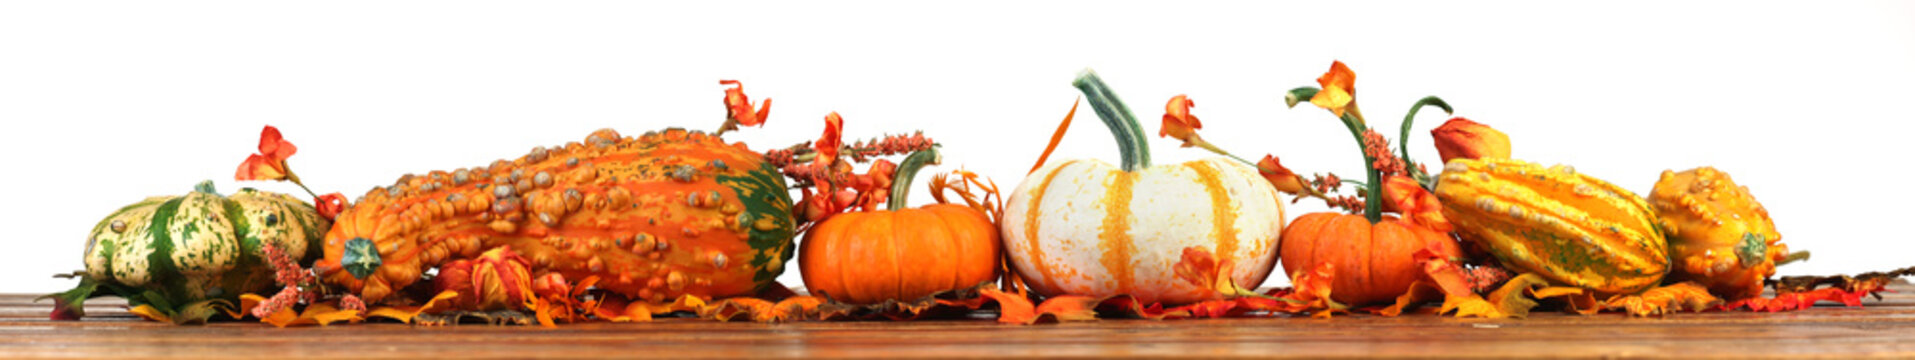 Autumn pumpkins and gourds background